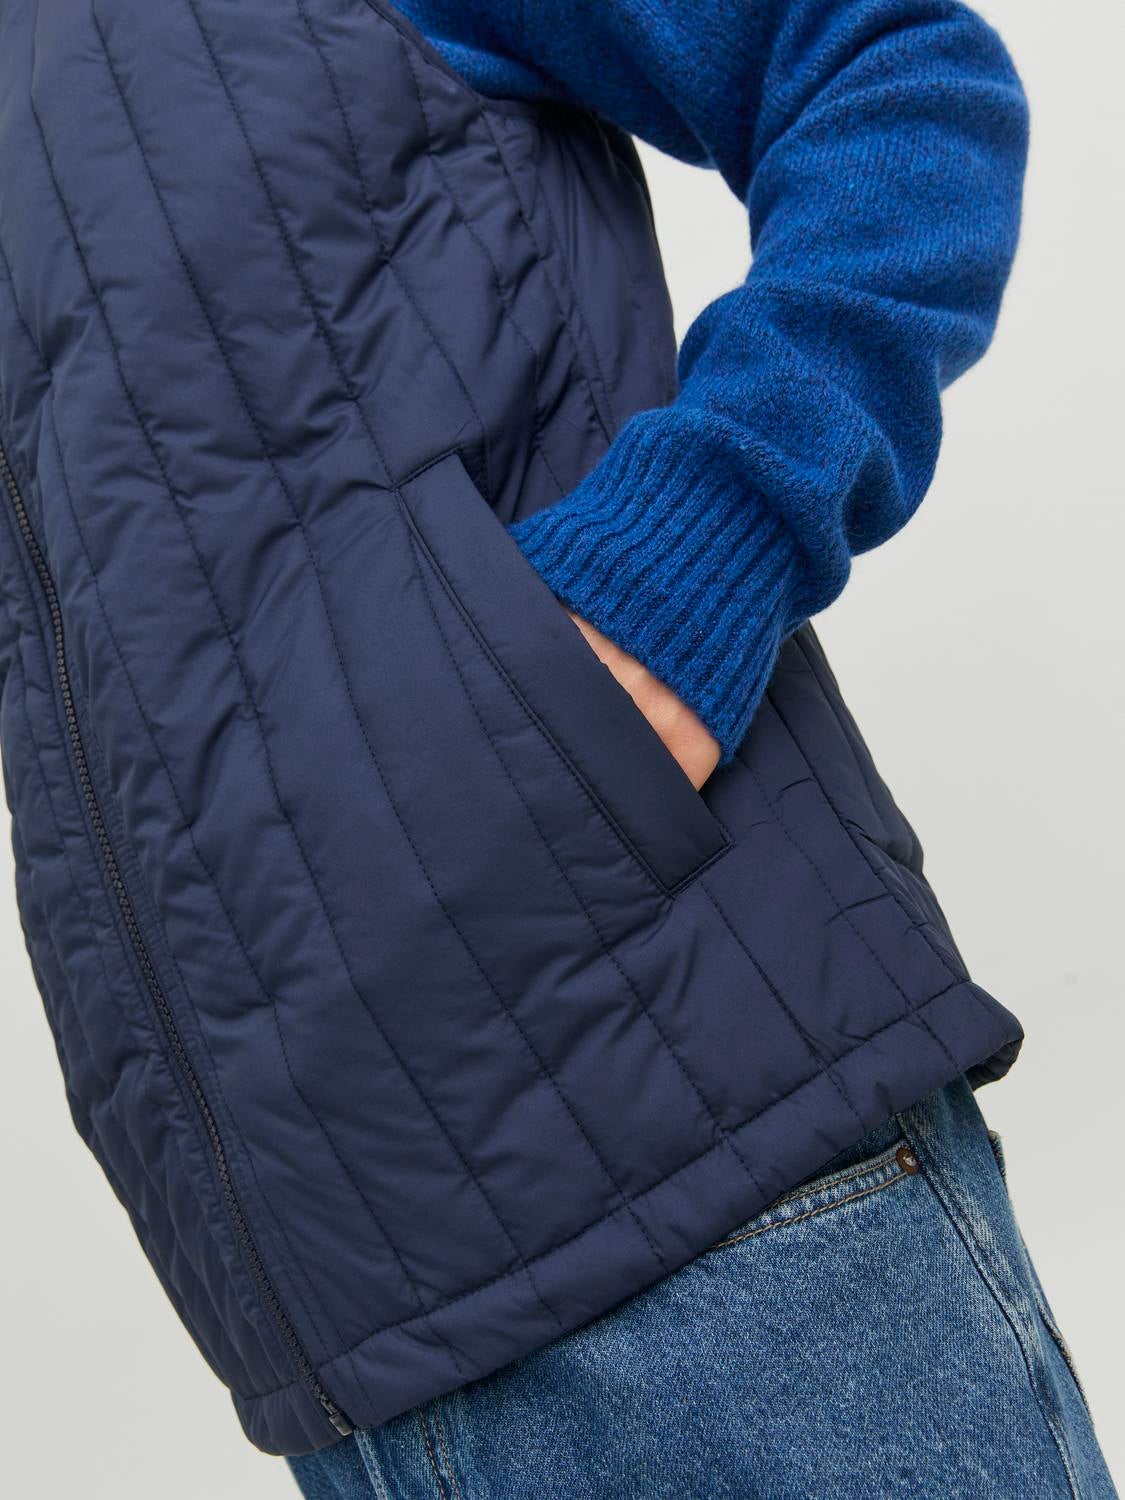 Jack & Jones Quilted Jacket Size S | eBay